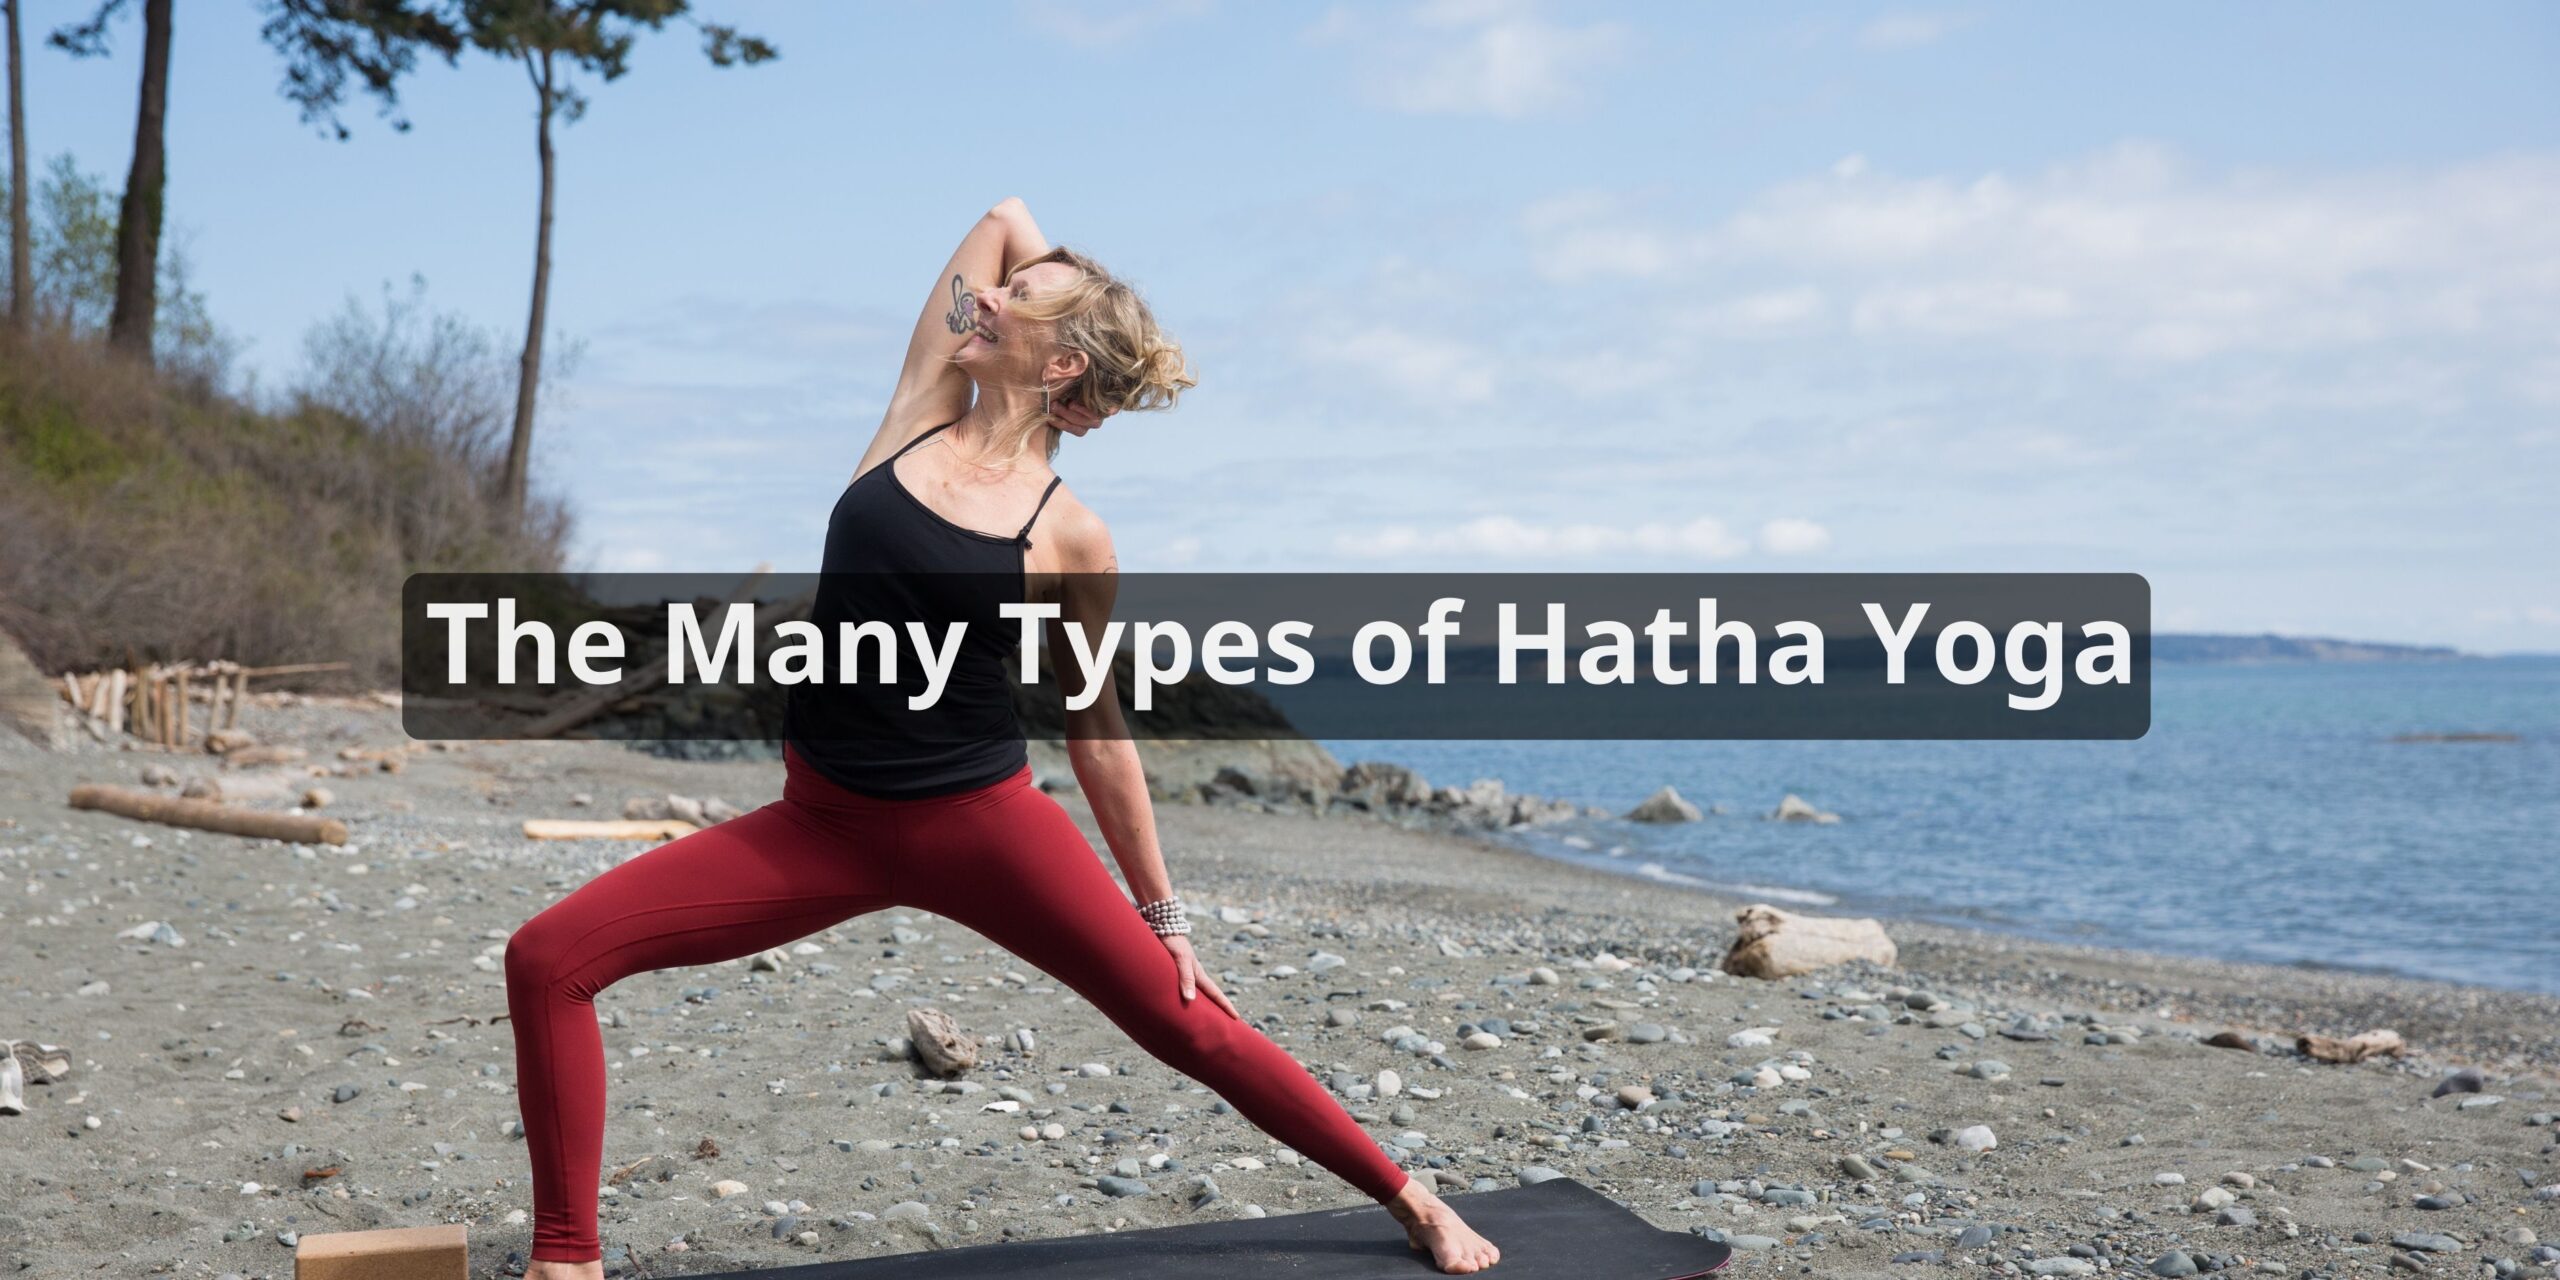 The Many Types of Hatha Yoga